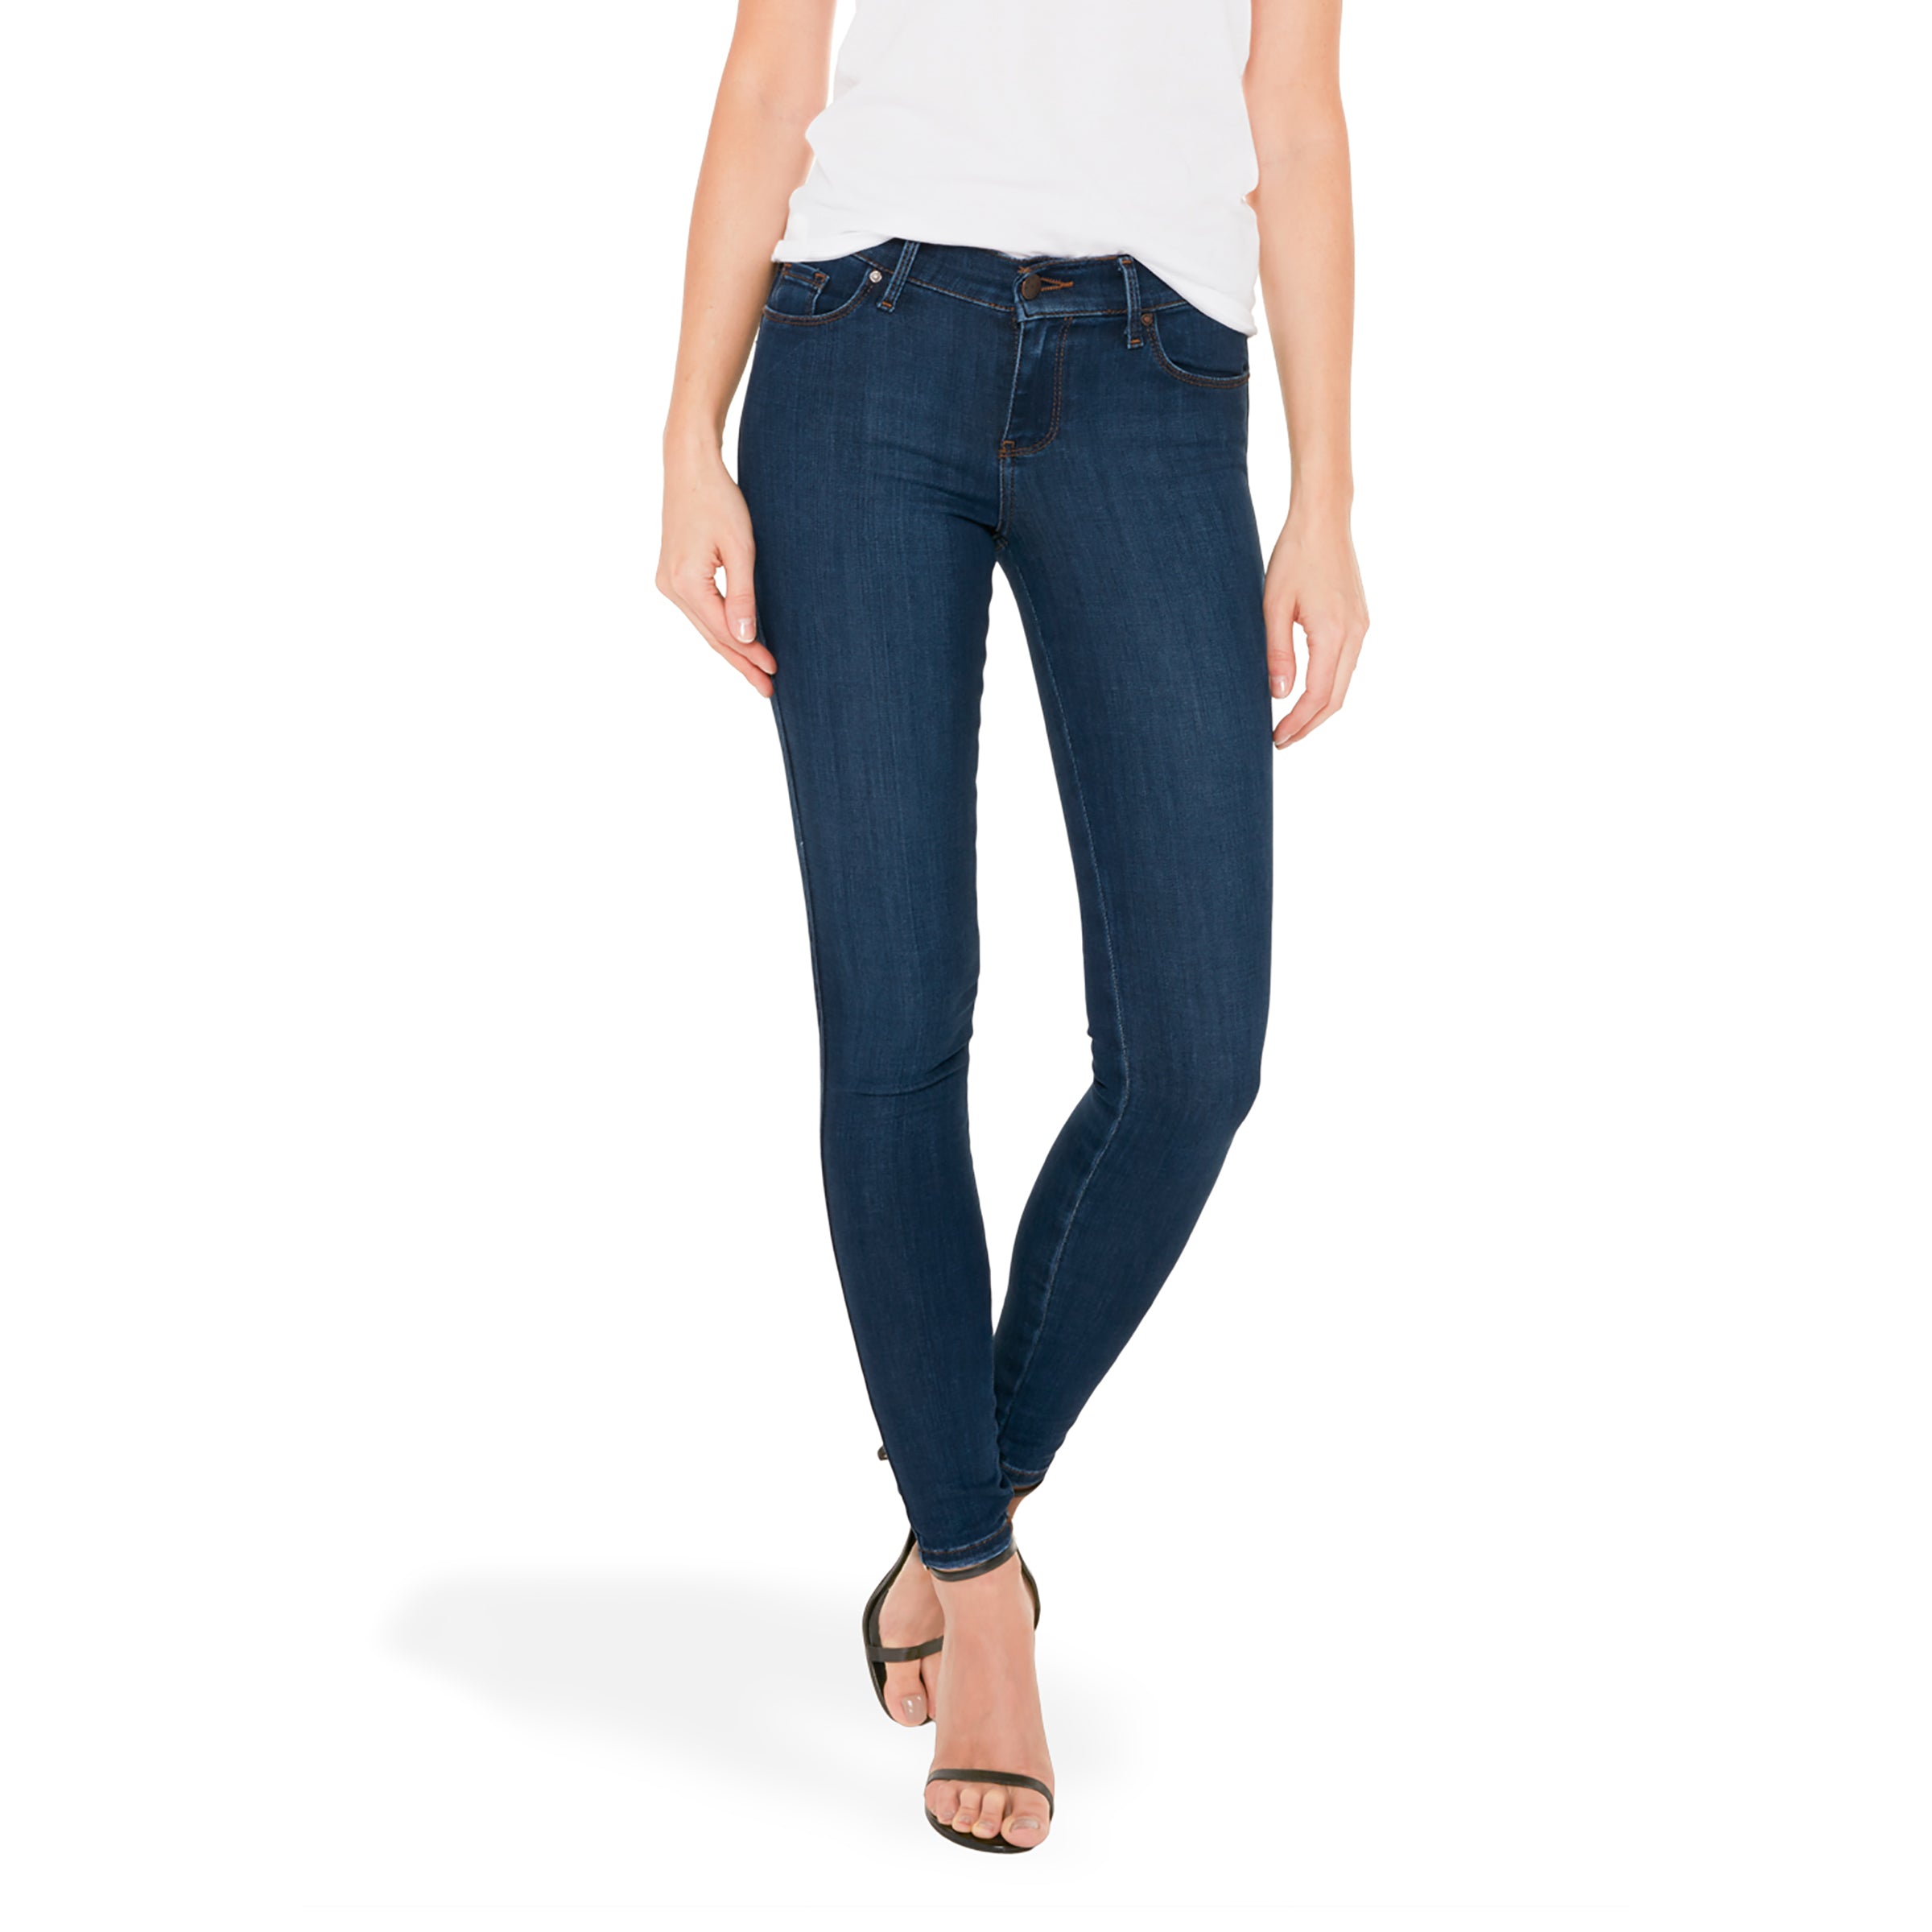 Women wearing Medium Blue Mid Rise Skinny Jane Jeans